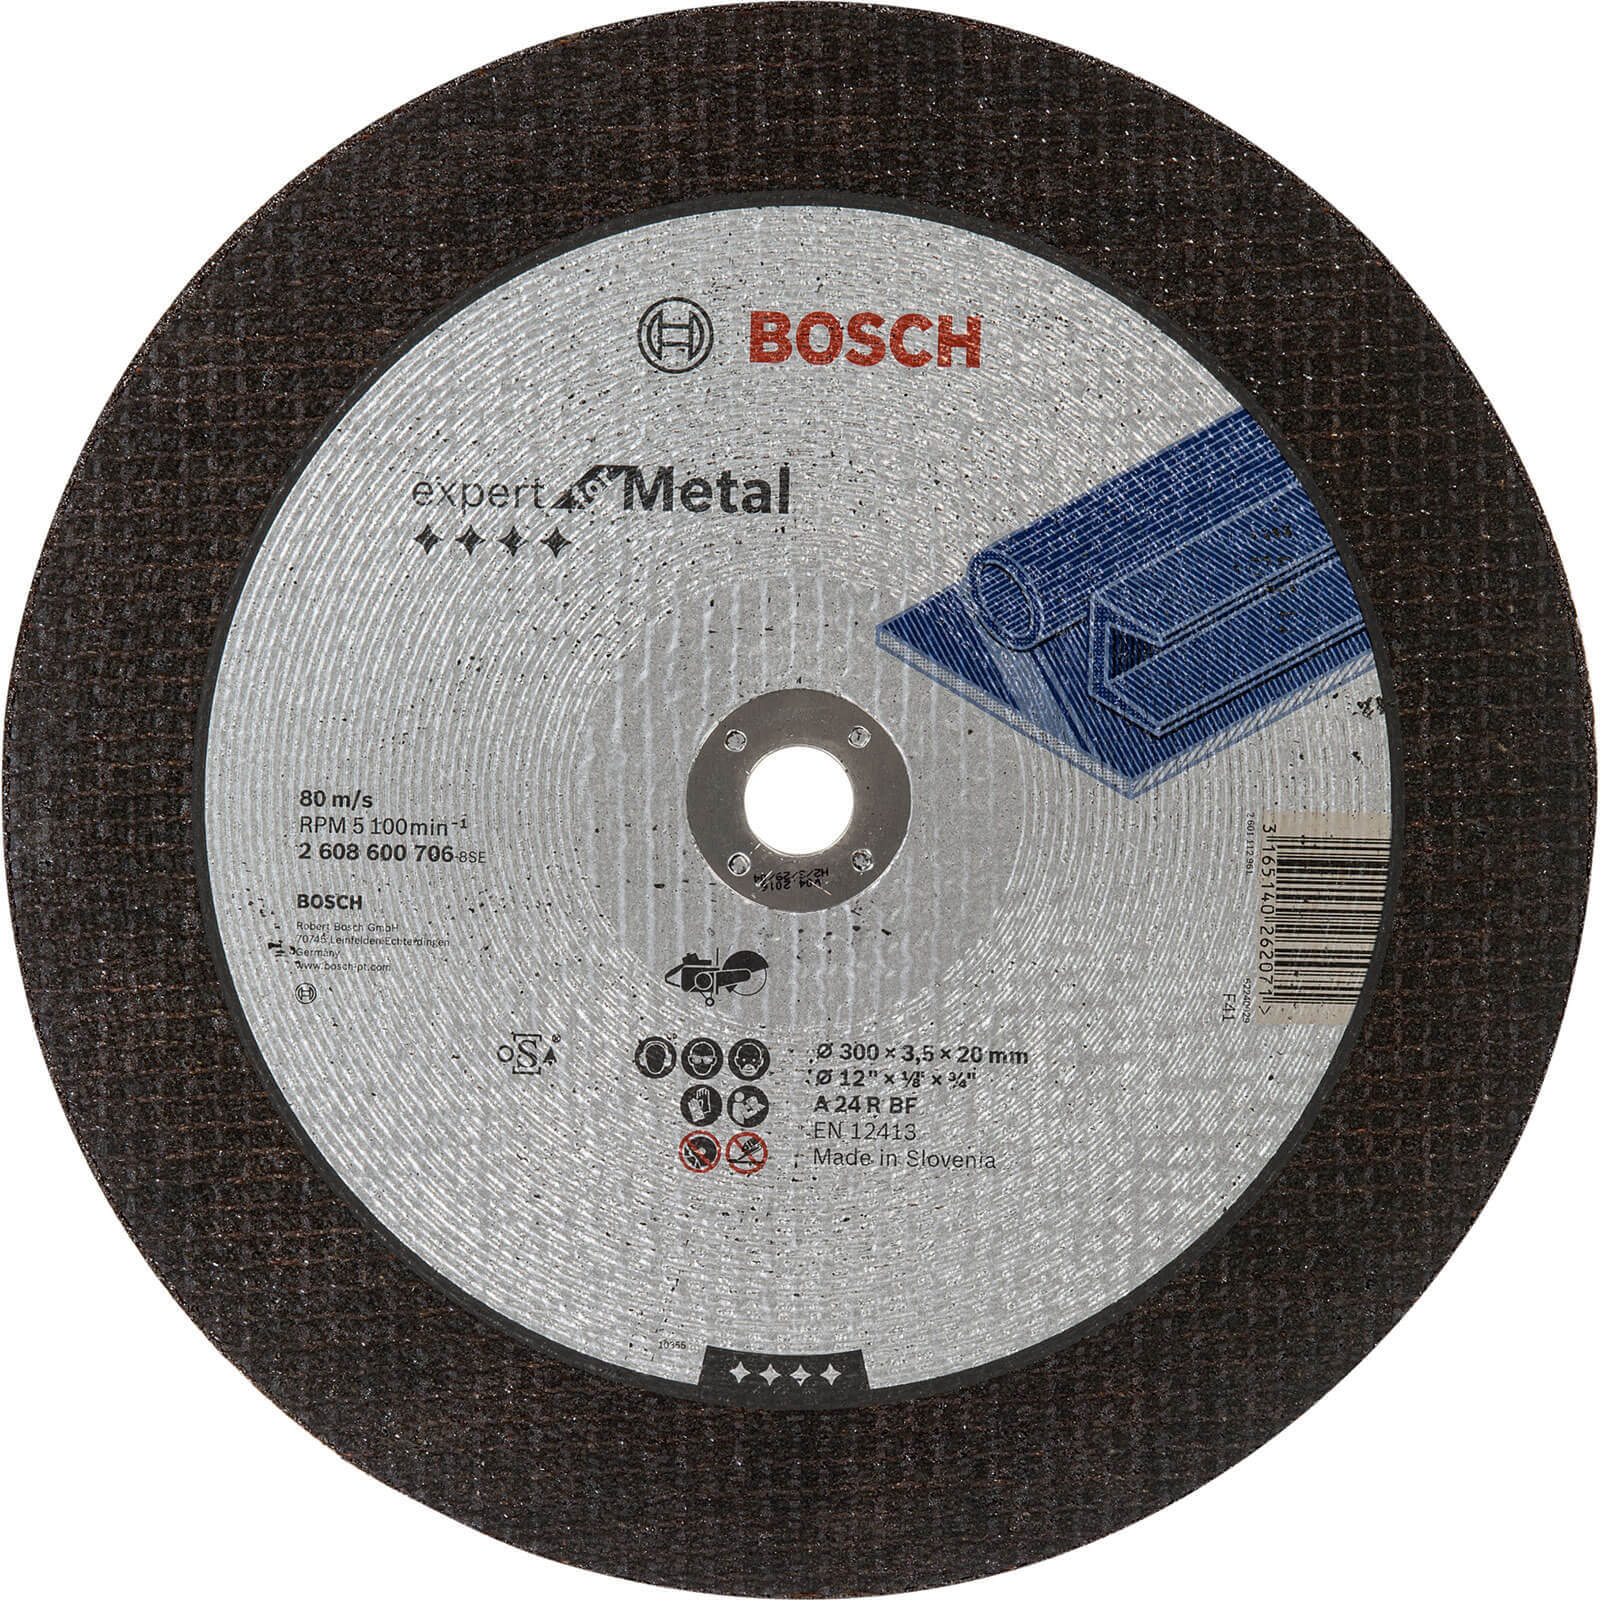 Image of Bosch A24R BF Flat Metal Cutting Disc 300mm For Petrol Cut Saws 300mm